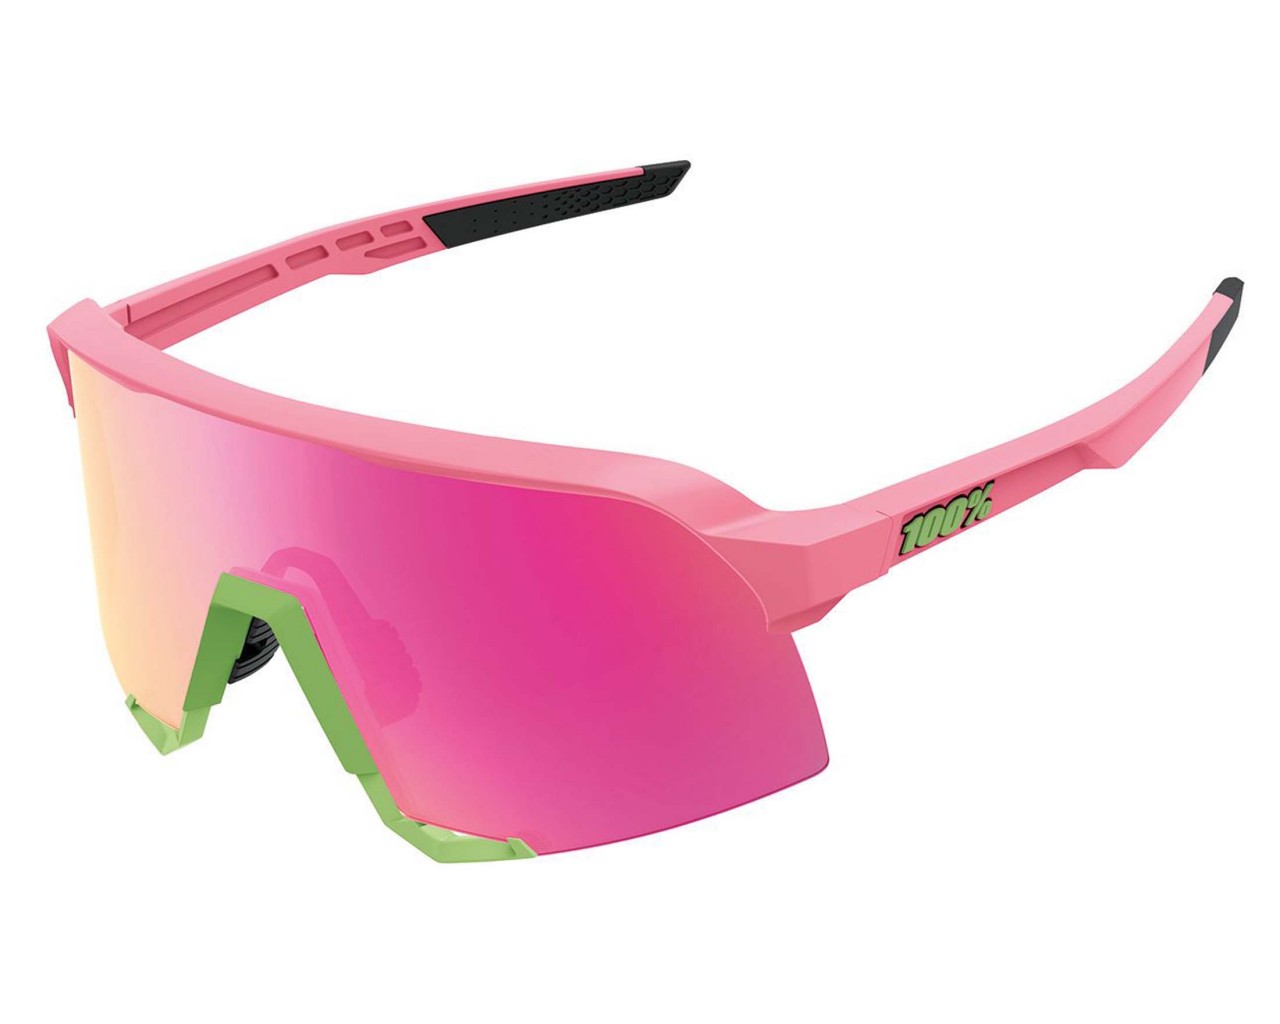 100% S3 - Mirror Lens Fahrrad Sonnenbrille | matte washed out neon pink